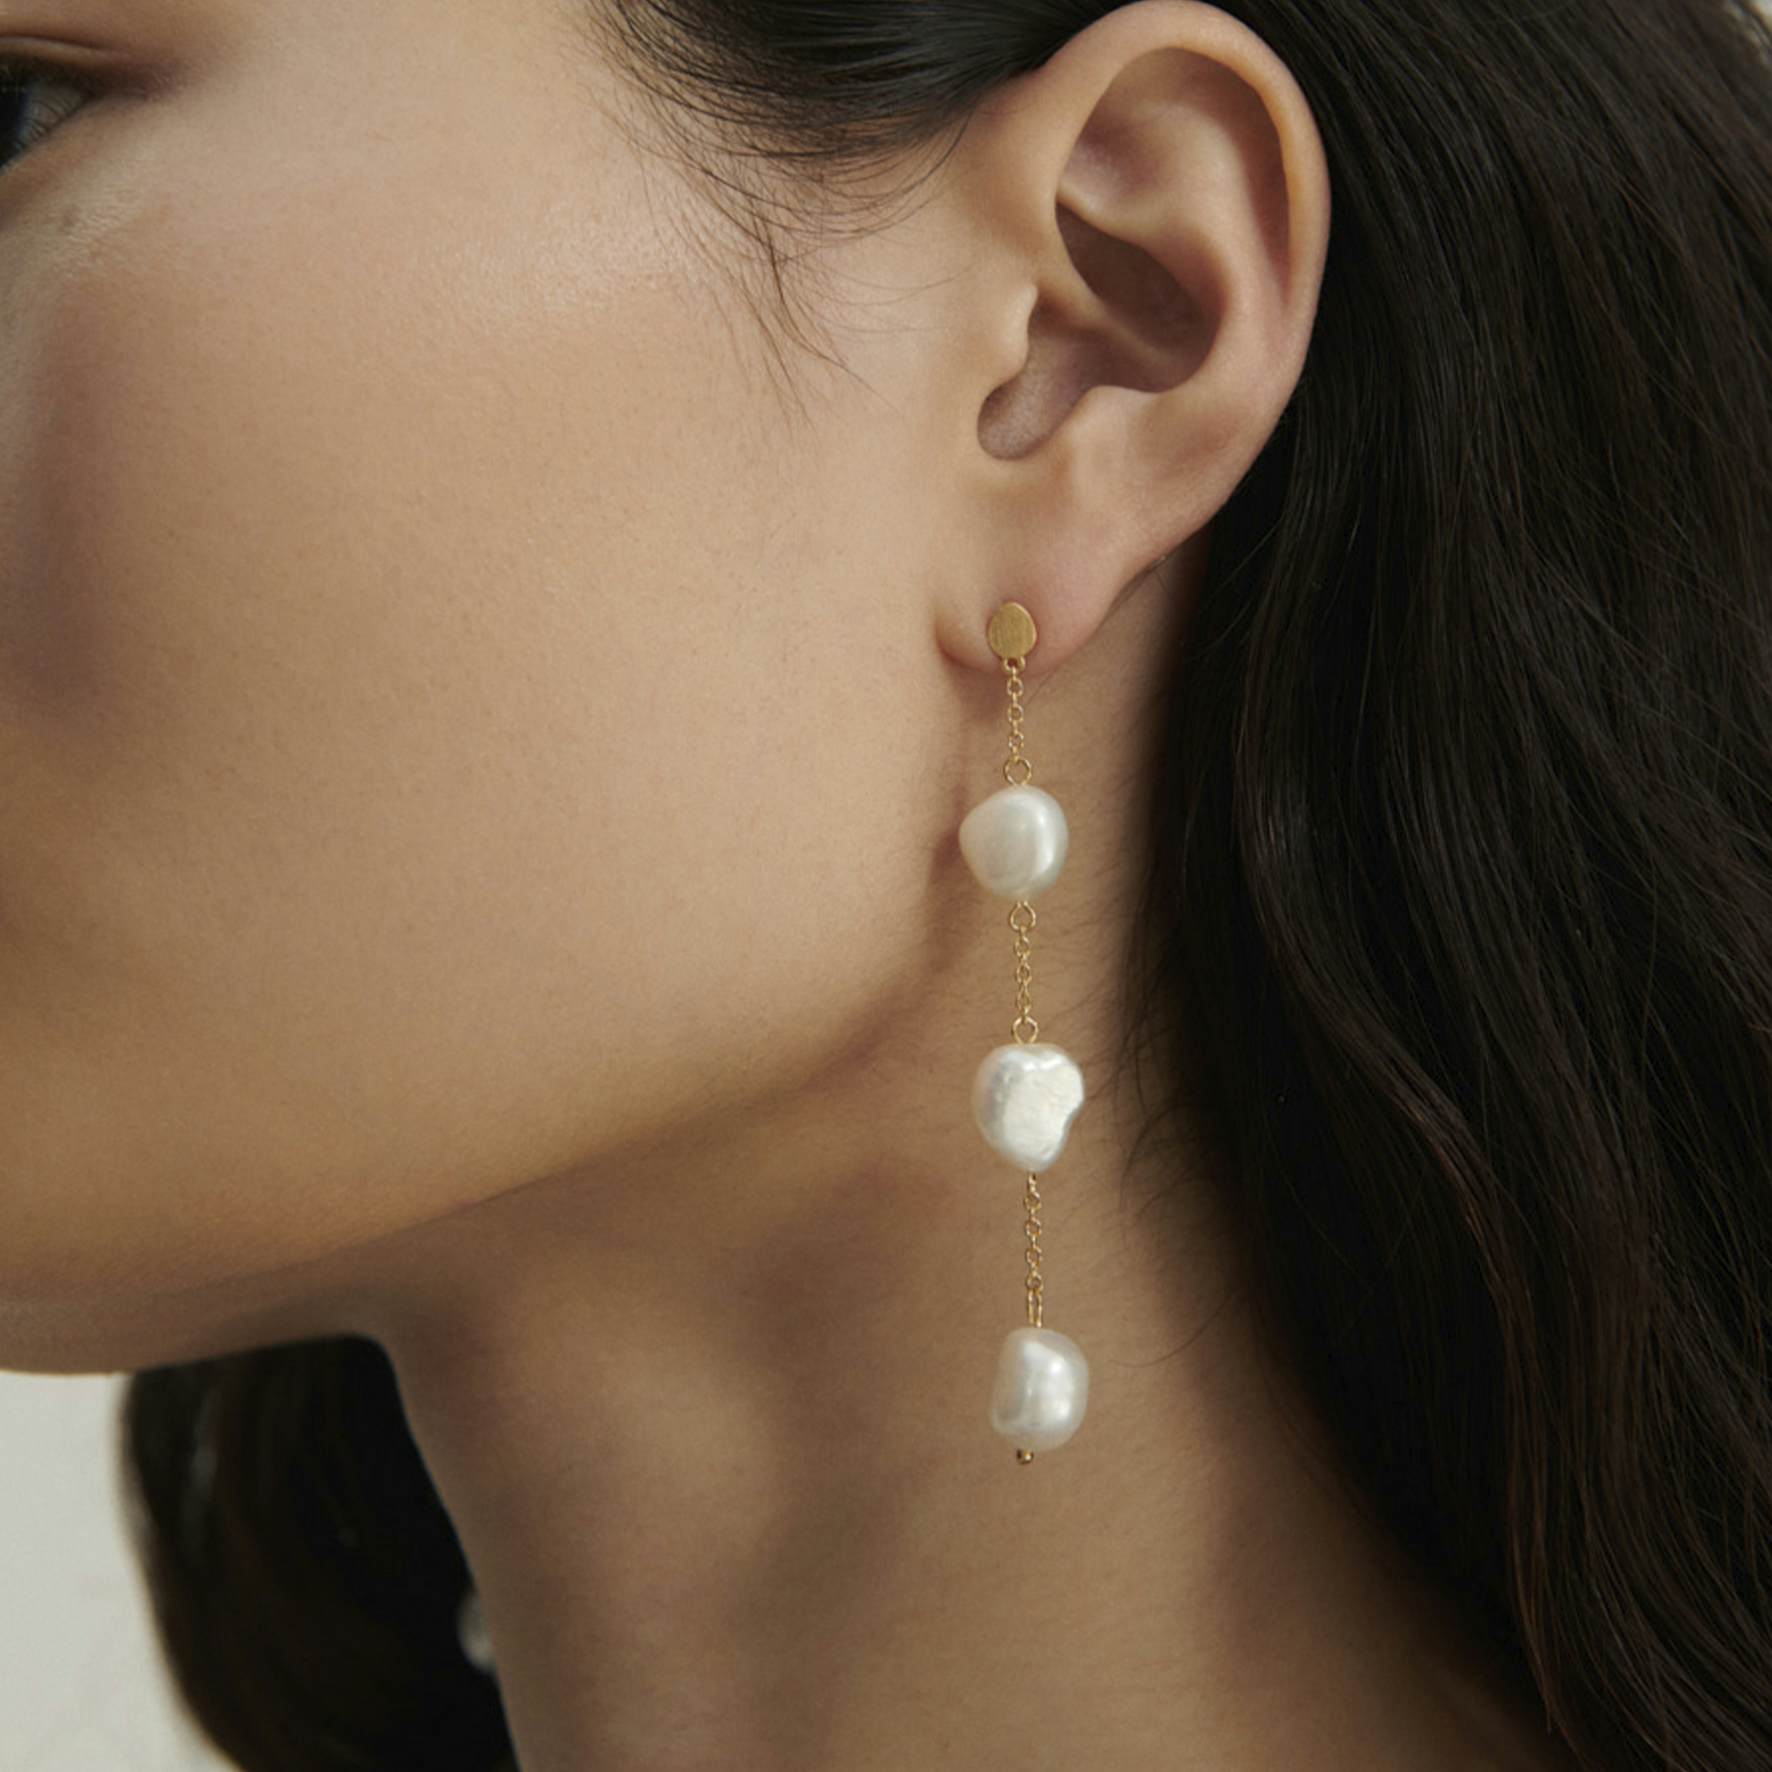 3-Pearls Earchains från Sorelle Jewellery i Silver Sterling 925